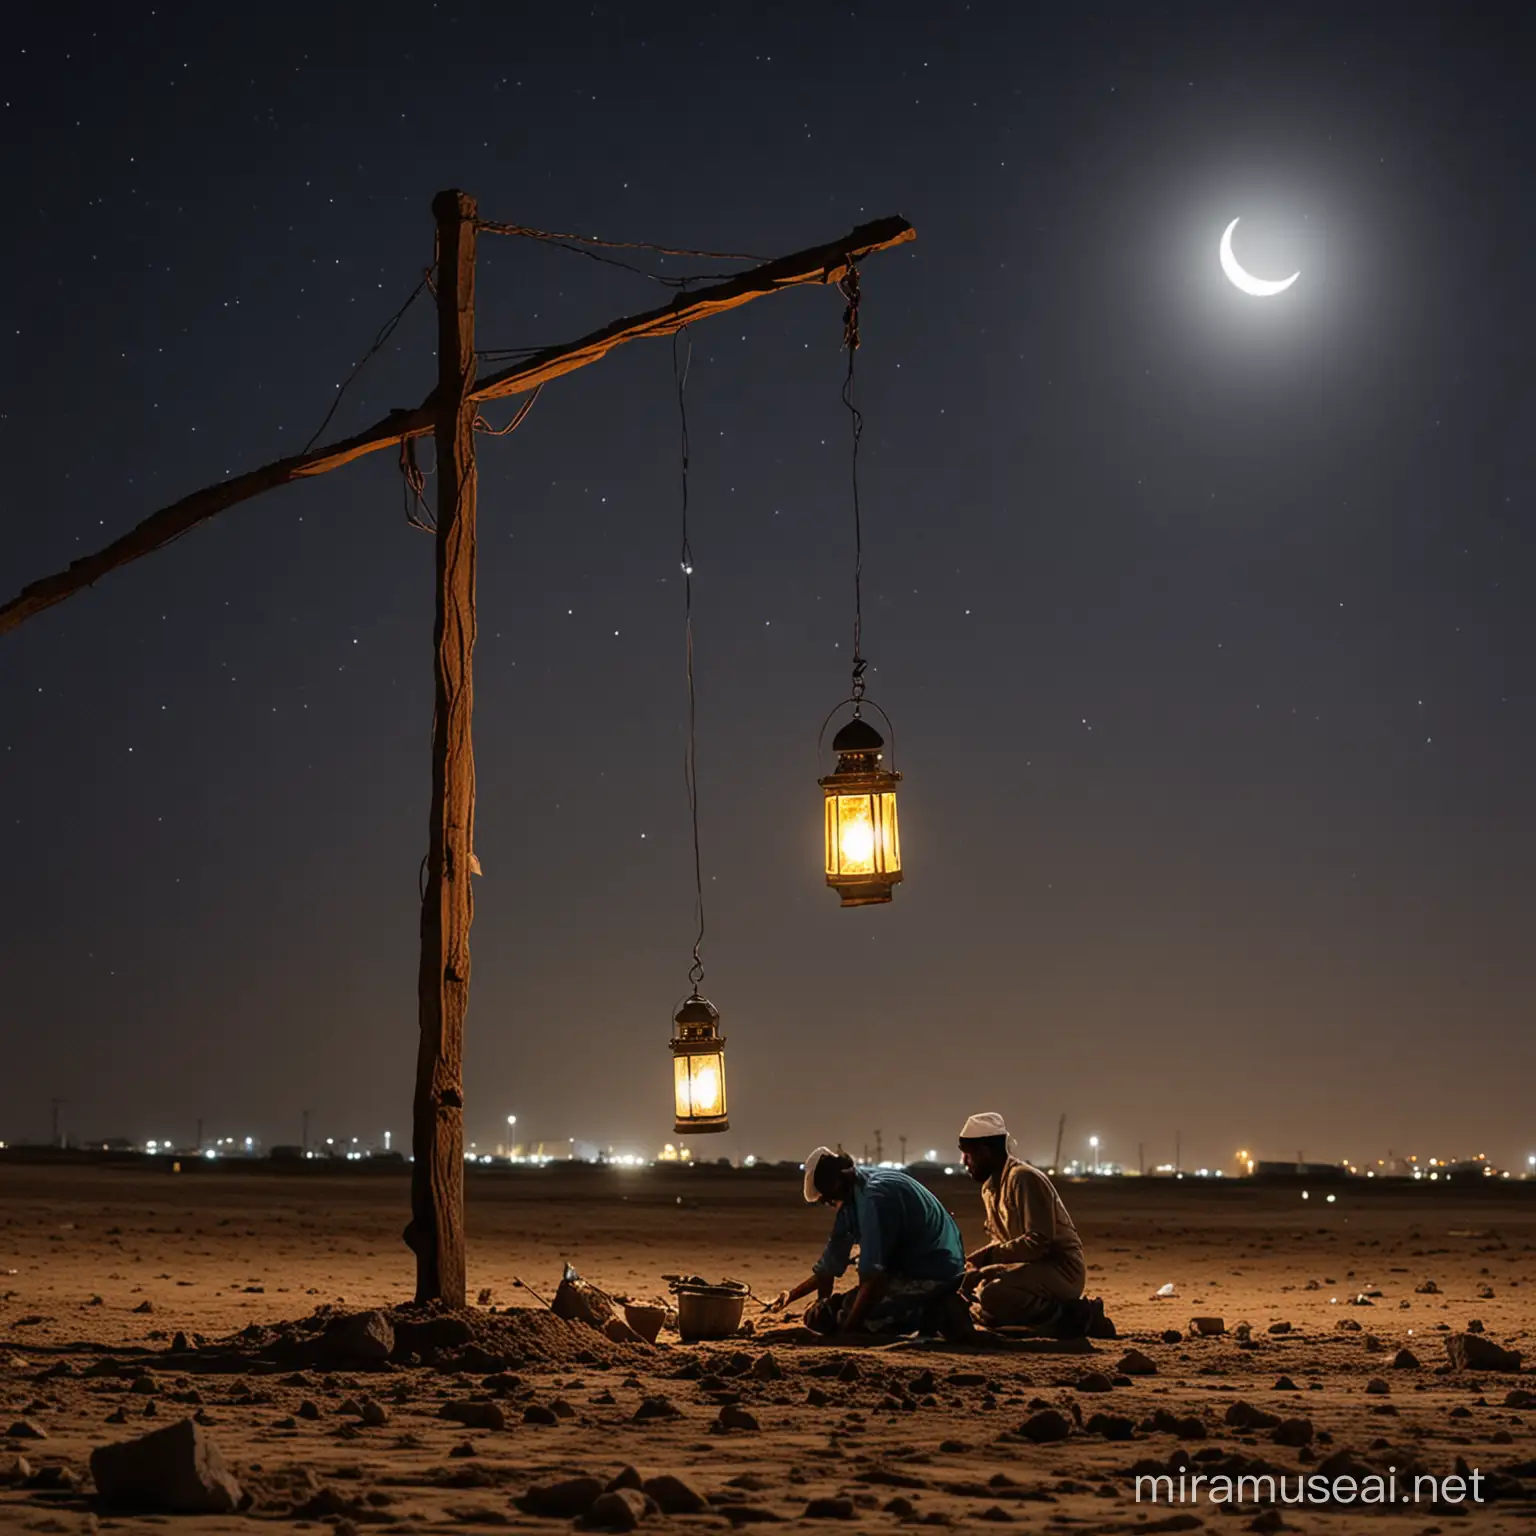 Ramadan Engineering Crescent Moon Workers Amidst Lanterns